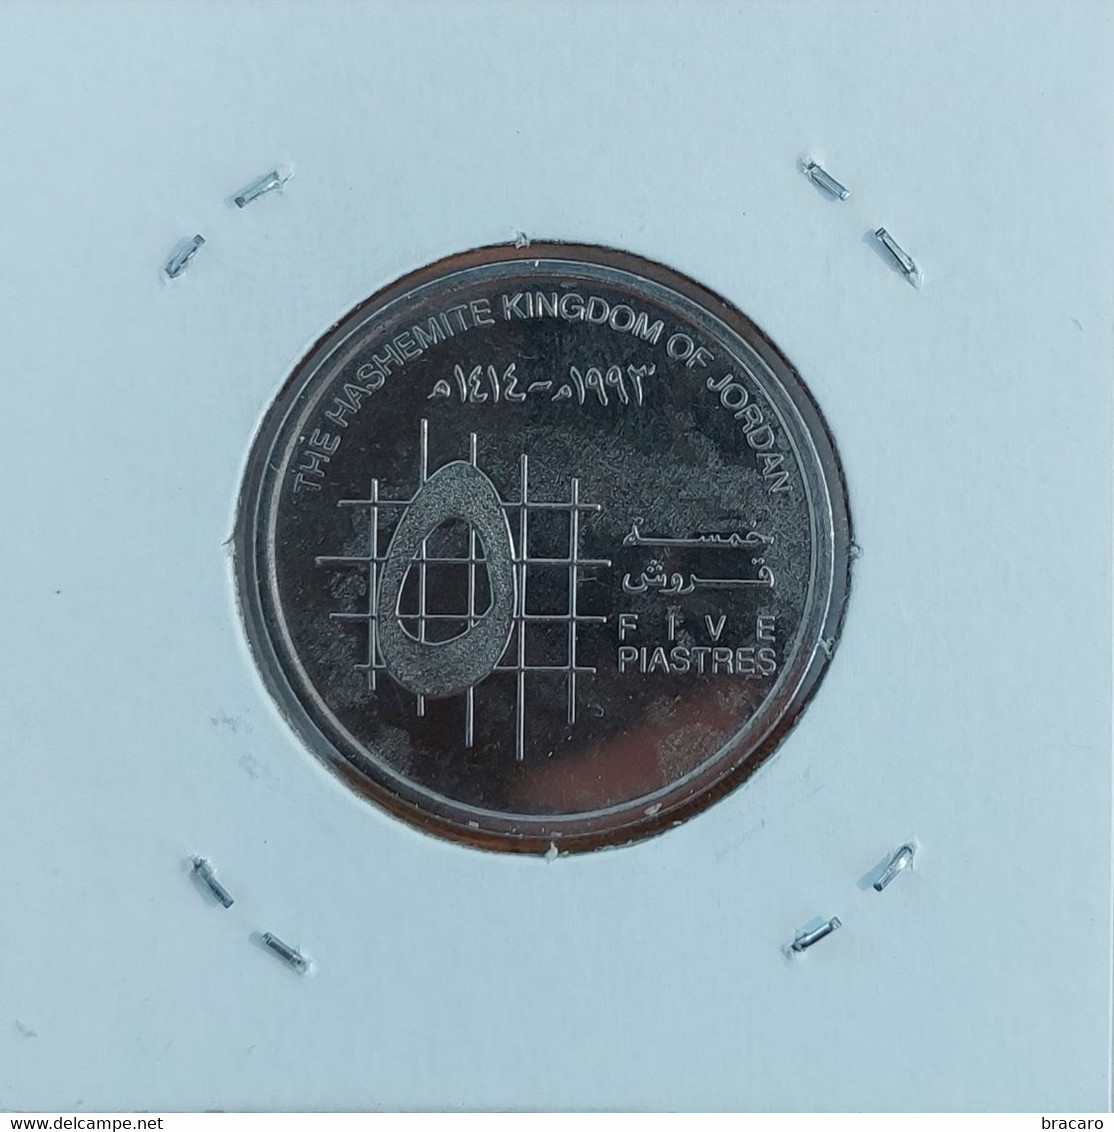 ASIA (LEBANON, LIBYA, SRI LANKA, SAUDI ARABIA, BAHRAIN, BRUNEI, JORDAN, INDONESIA, UAE) - 12 coins (very good condition)